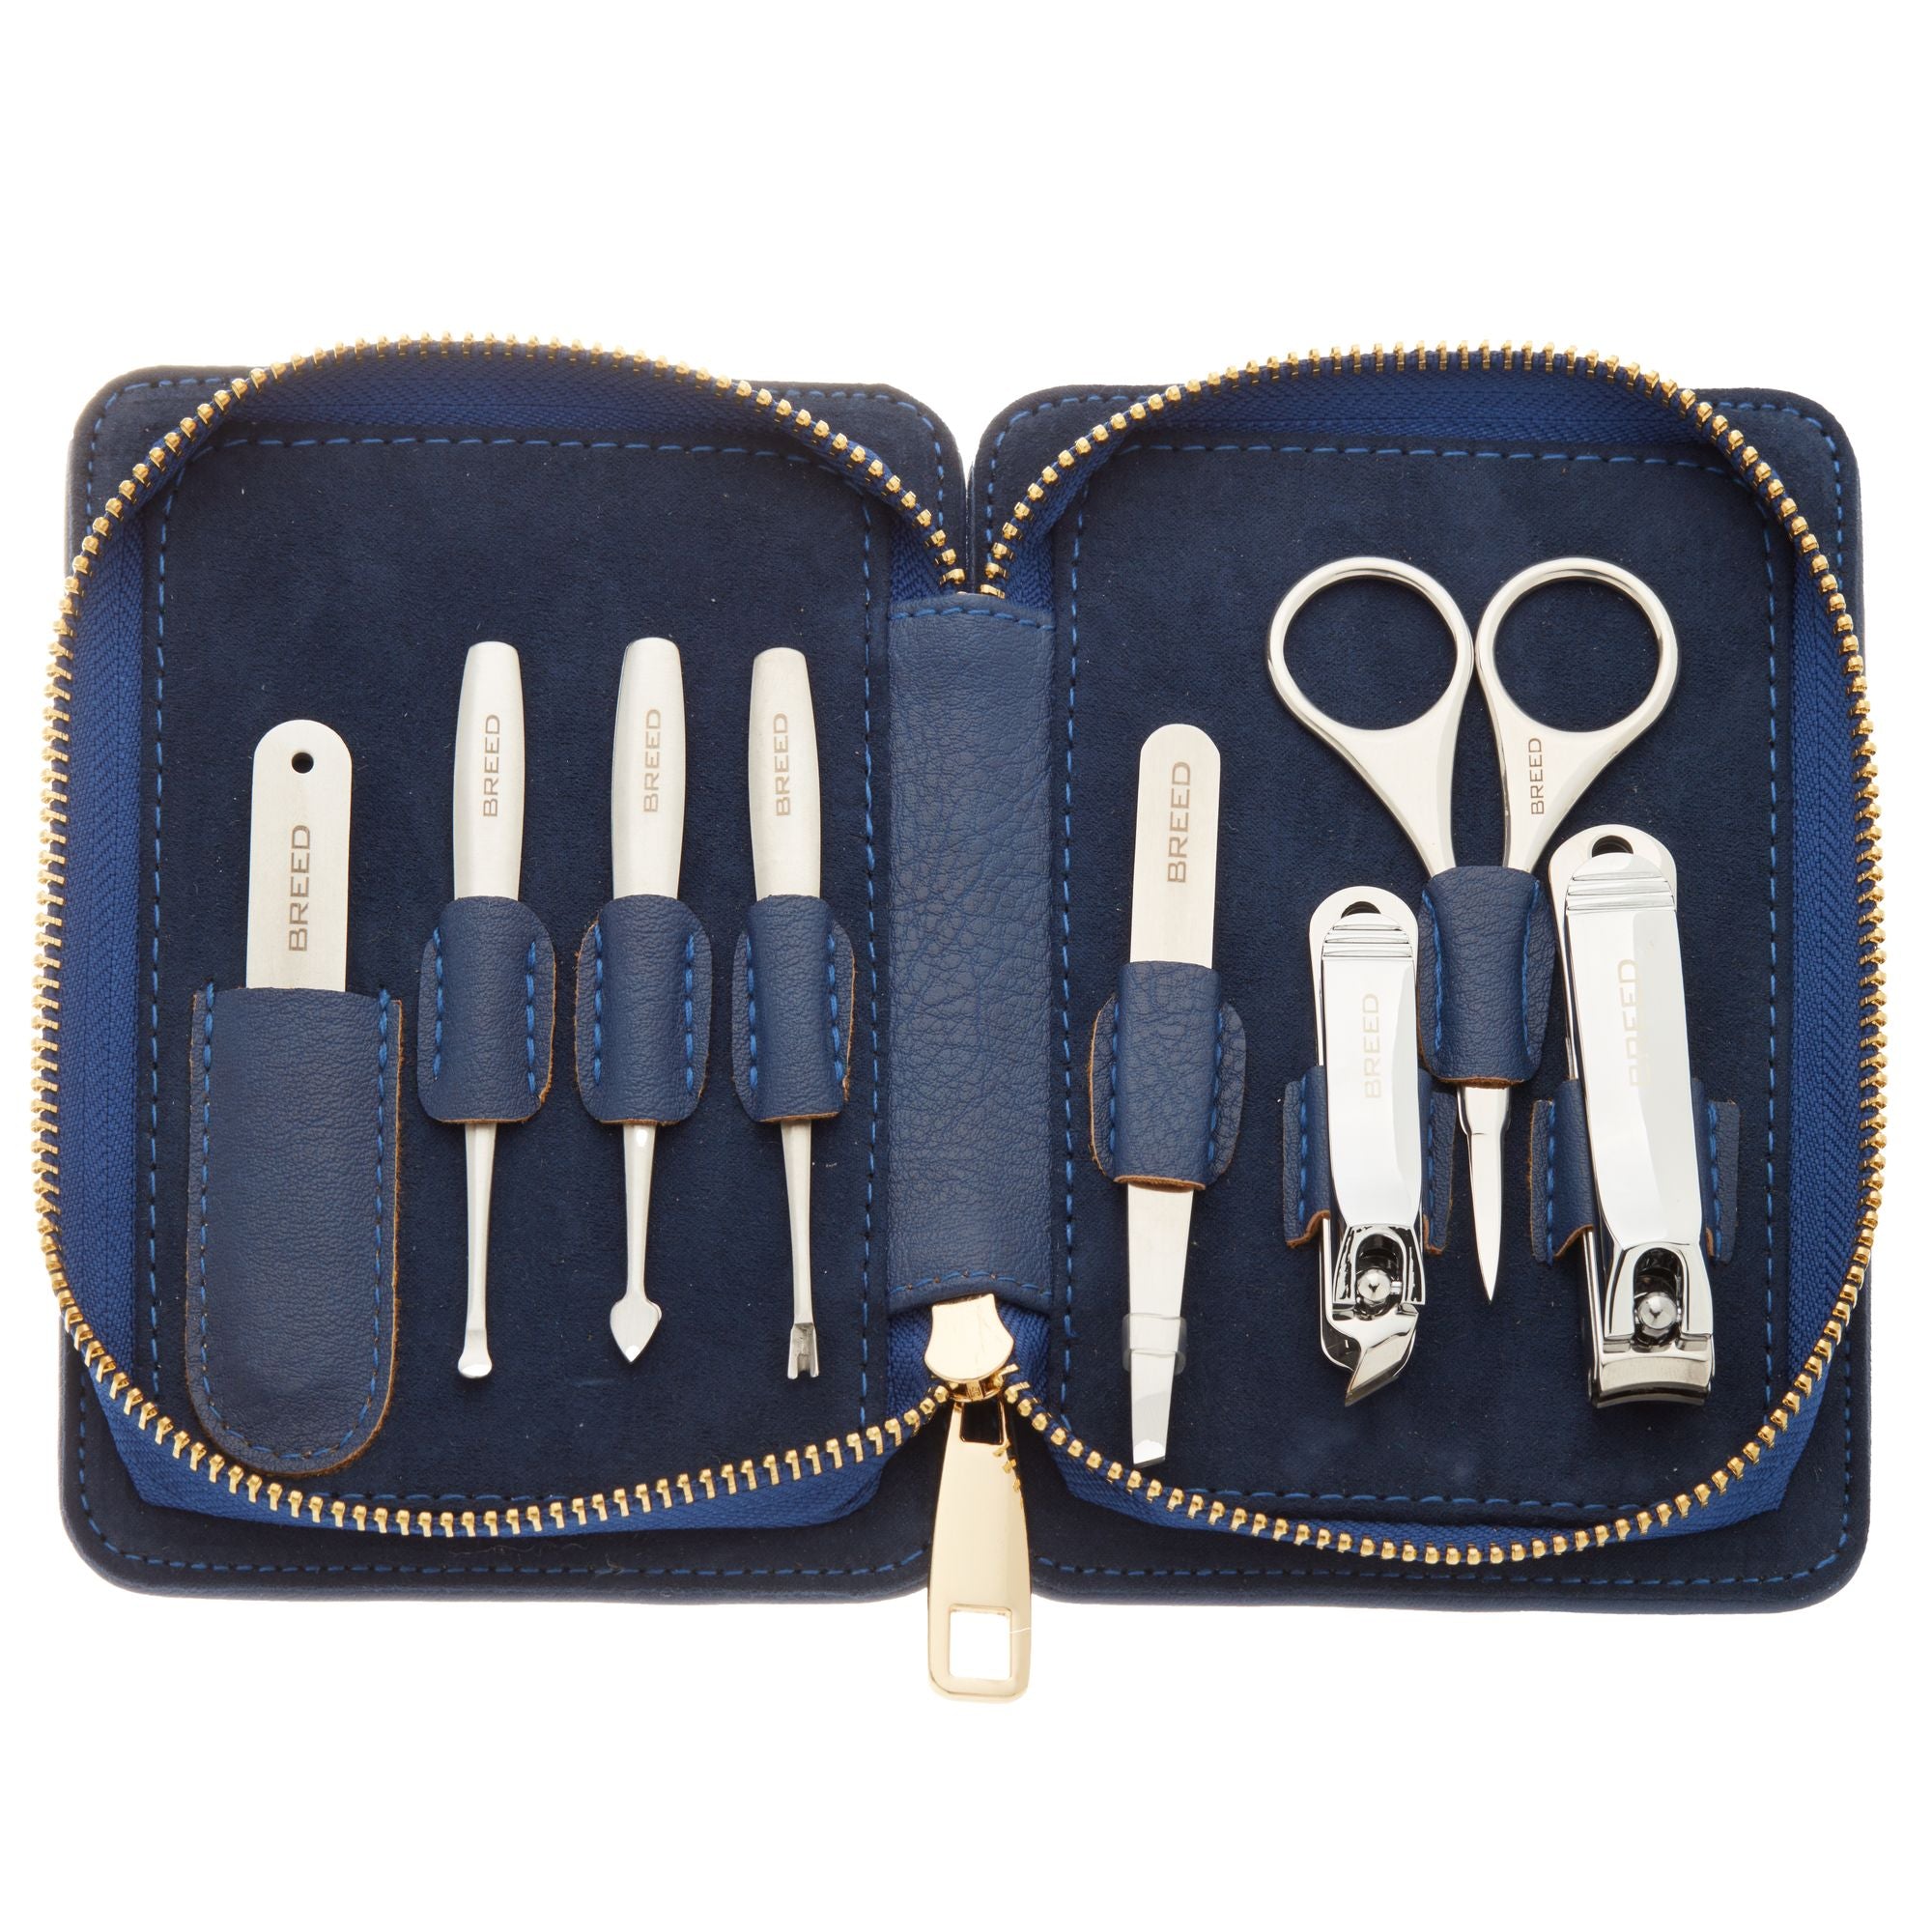 Breed Katana 8 Piece Surgical Steel Groom Kit - Blue Case - BRDGRMKIT-BLU